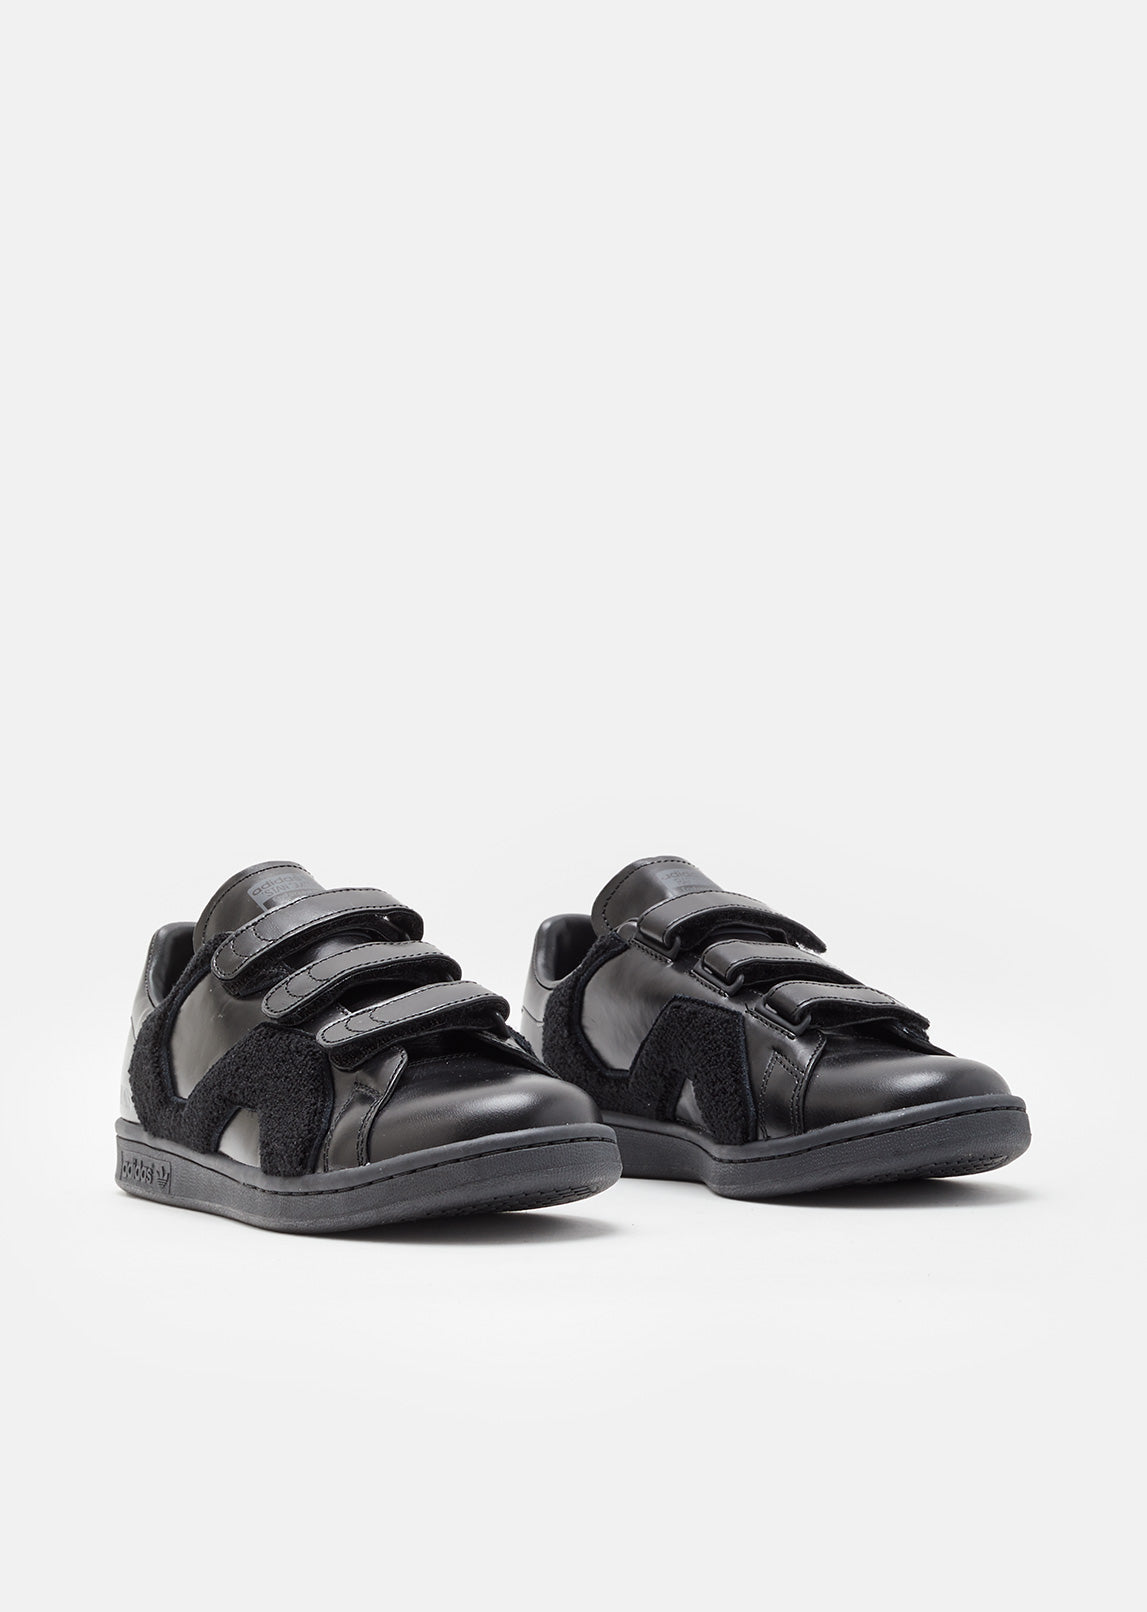 Buy adidas Women's Okapi 2 Velcro Leather Running Shoe, White/Lt Mar, 5.5 M  at Amazon.in